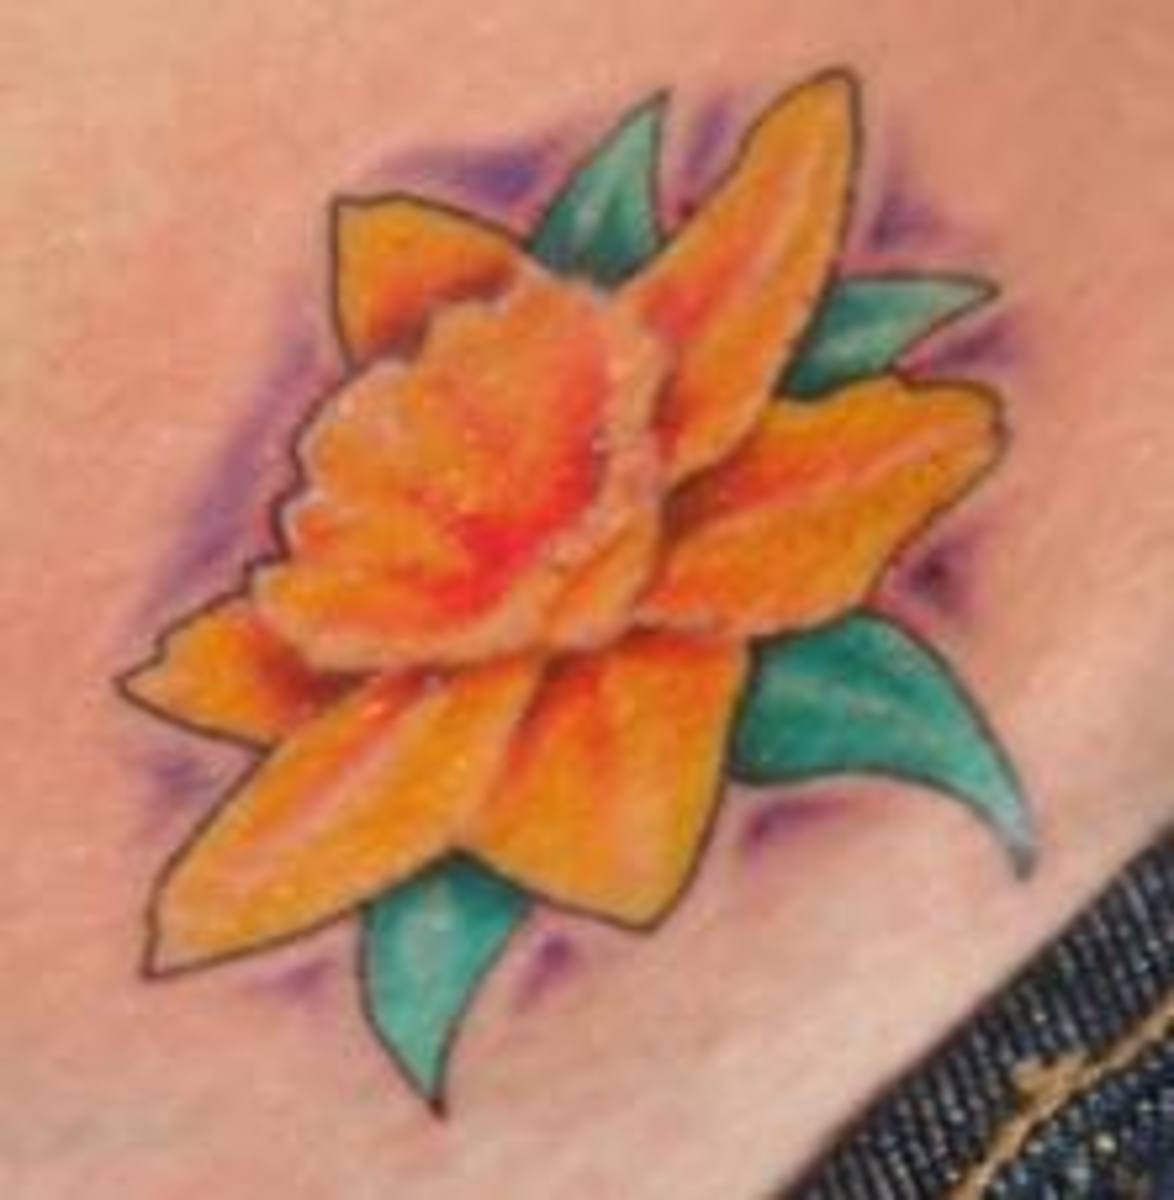 Daffodil Tattoos And Meanings-Daffodil Tattoo Designs And Ideas-Daffodil  Tattoo Images - HubPages